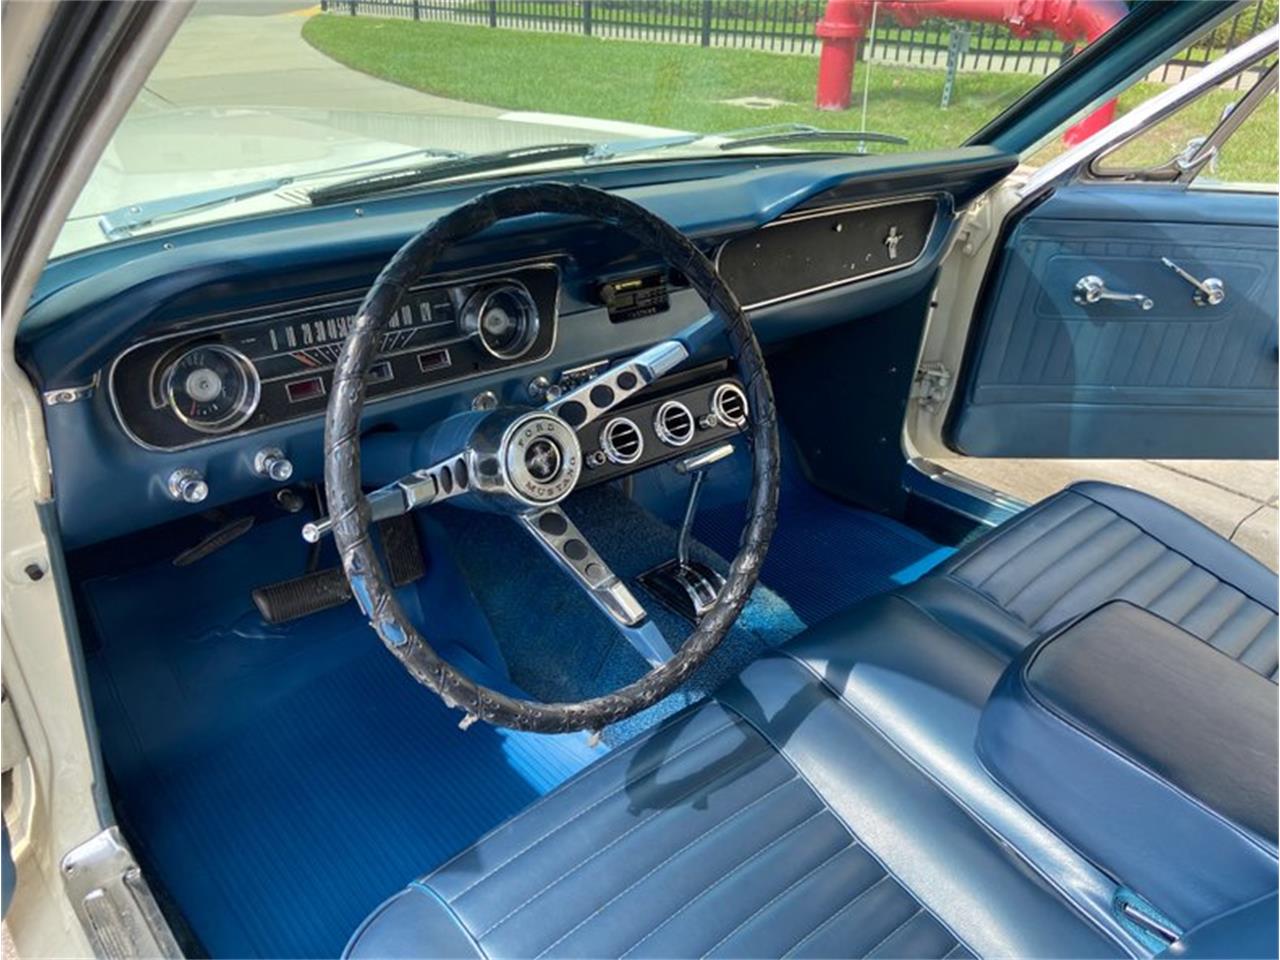 Ford Mustang 1965 prix tout compris